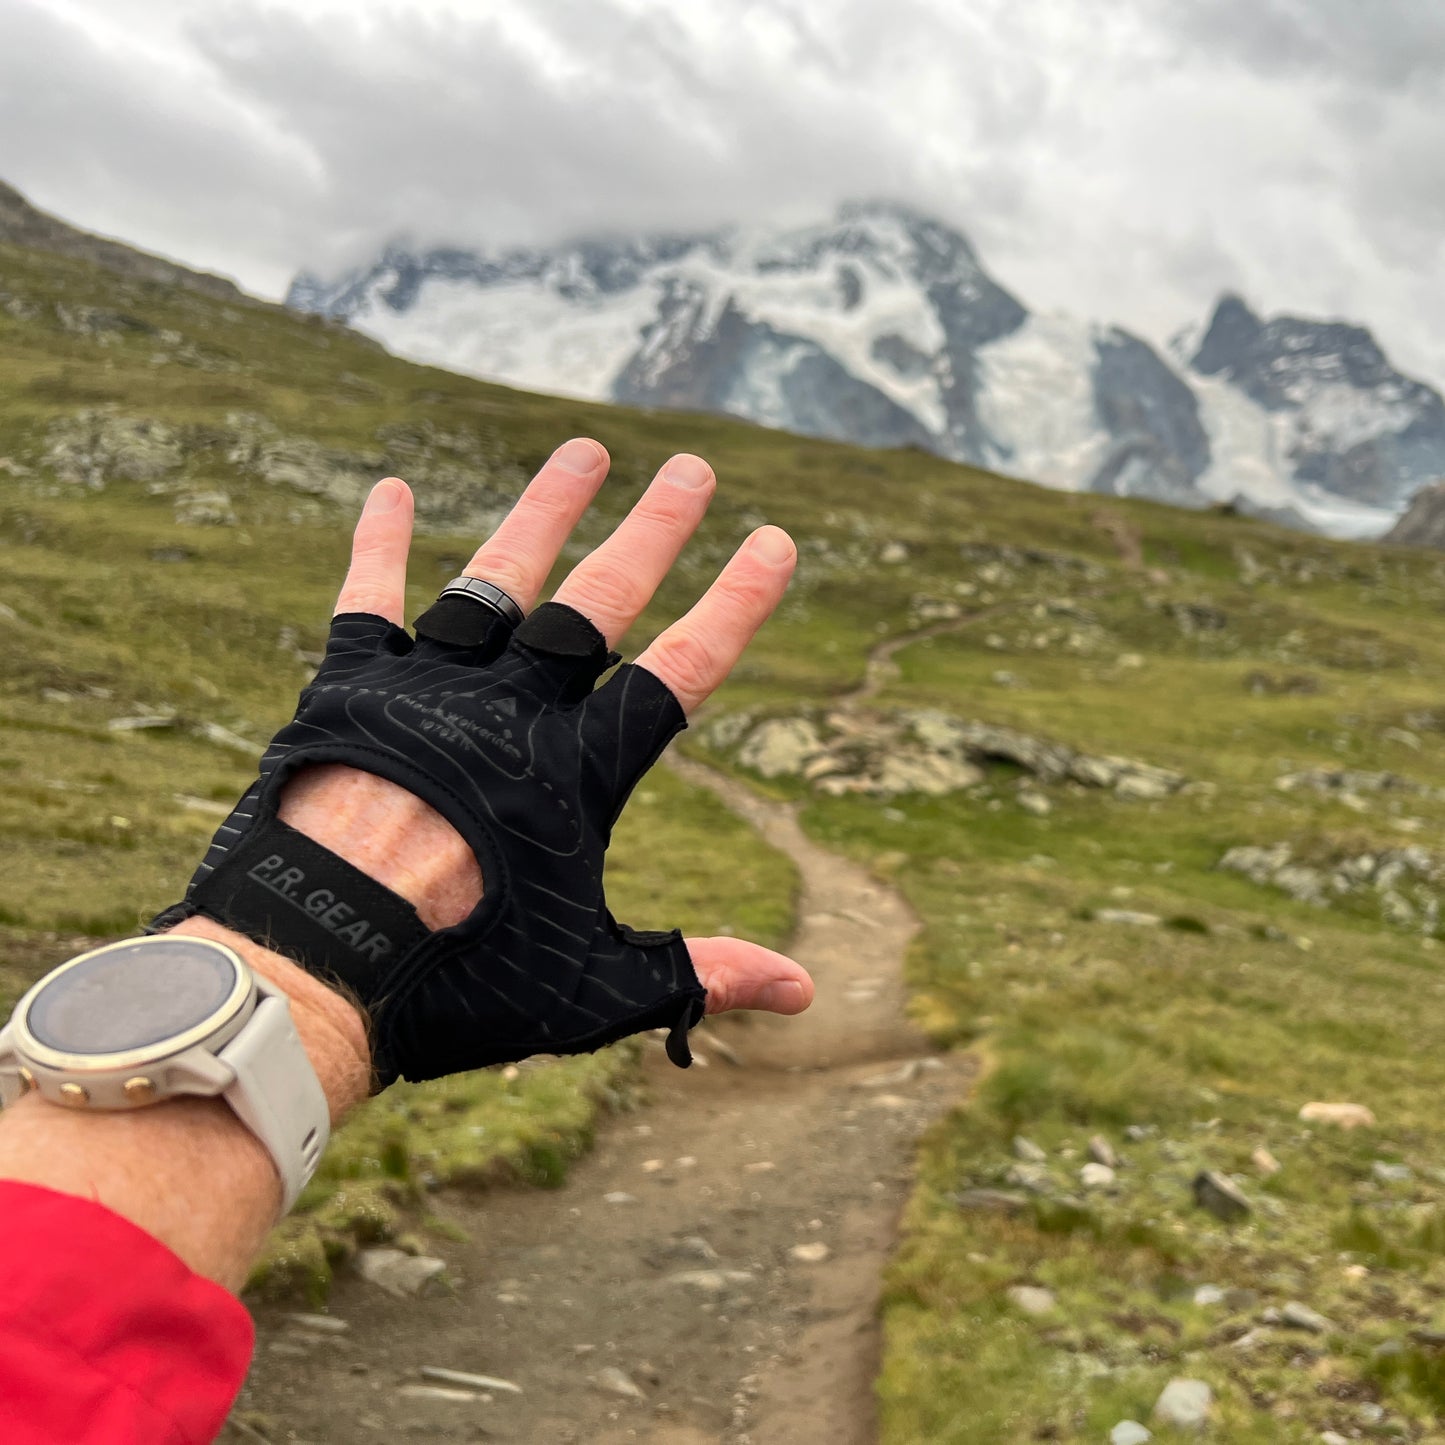 P.R. Gear Trail Gloves while running at the Matterhorn